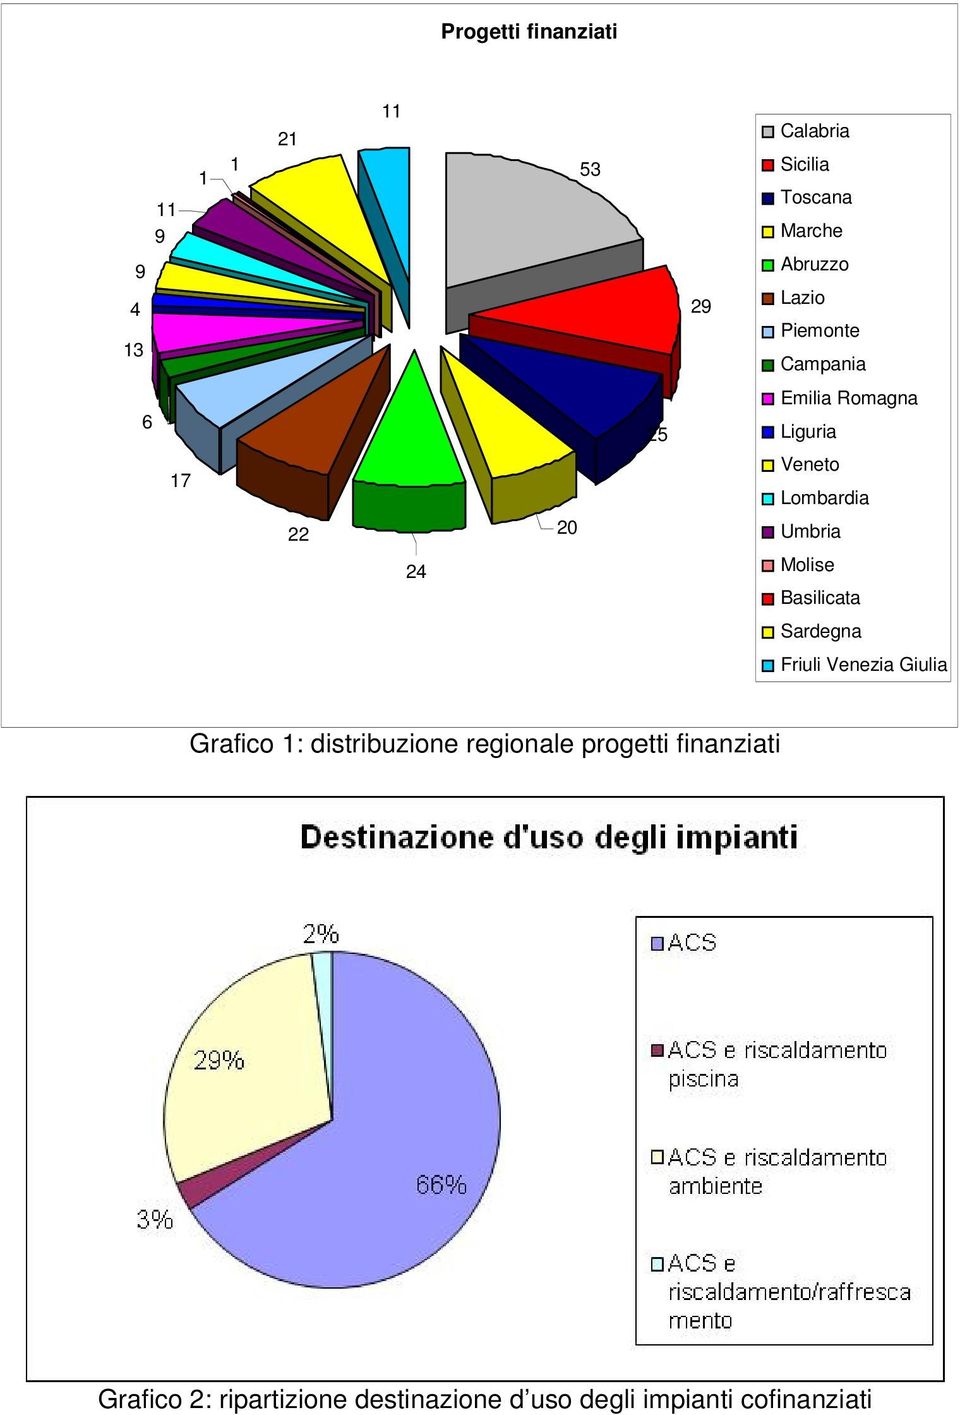 Molise Basilicata Sardegna Friuli Venezia Giulia Grafico 1: distribuzione regionale